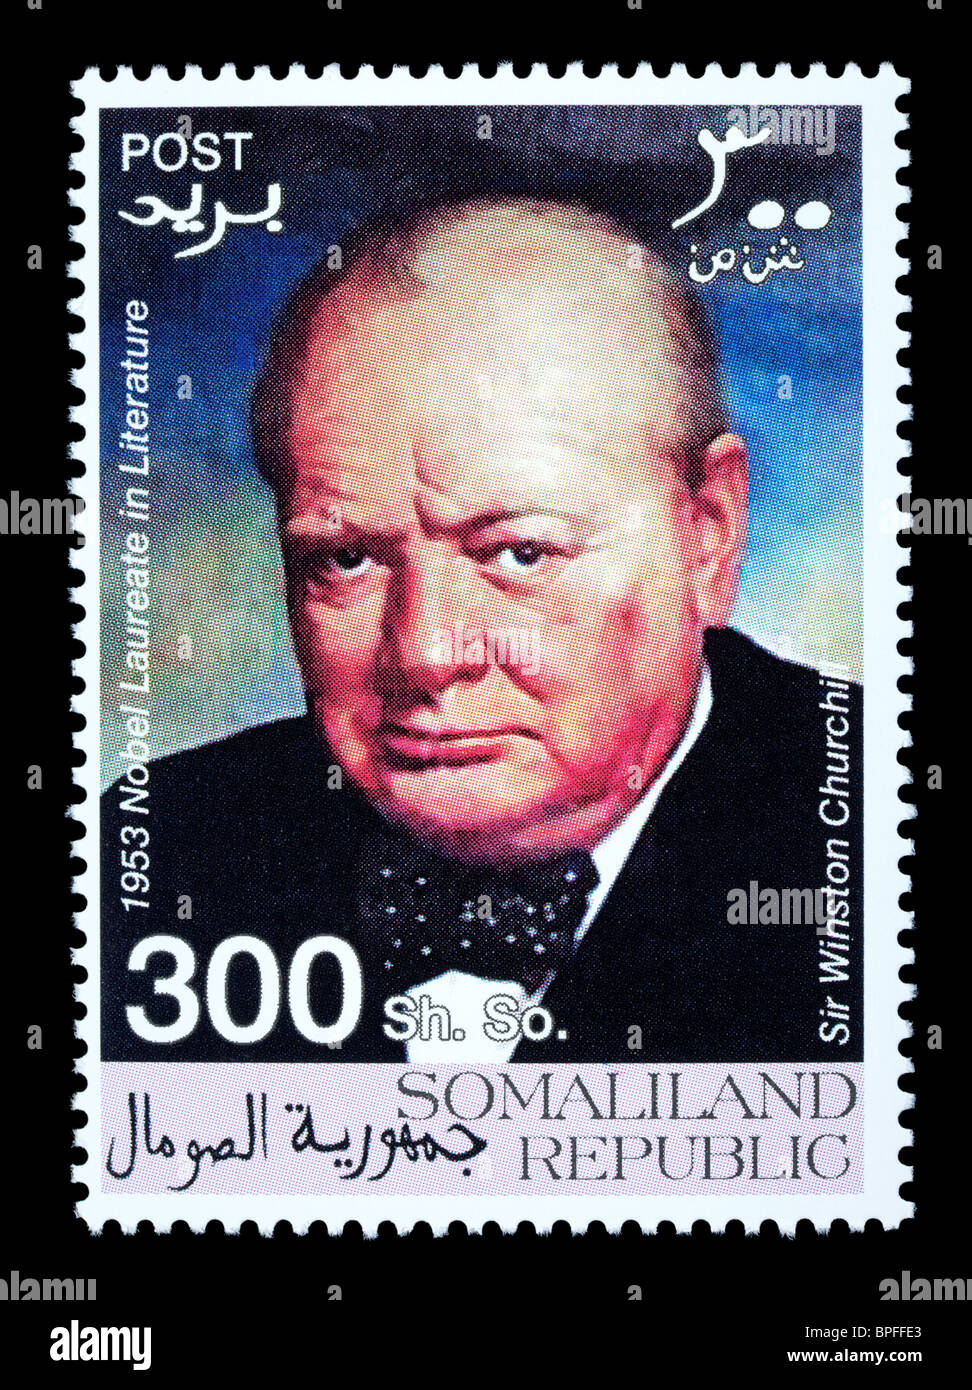 SOMALILAND - CIRCA 2008: A postage stamp printed in Somaliland showing Winston Churchill, circa 2008 Stock Photo